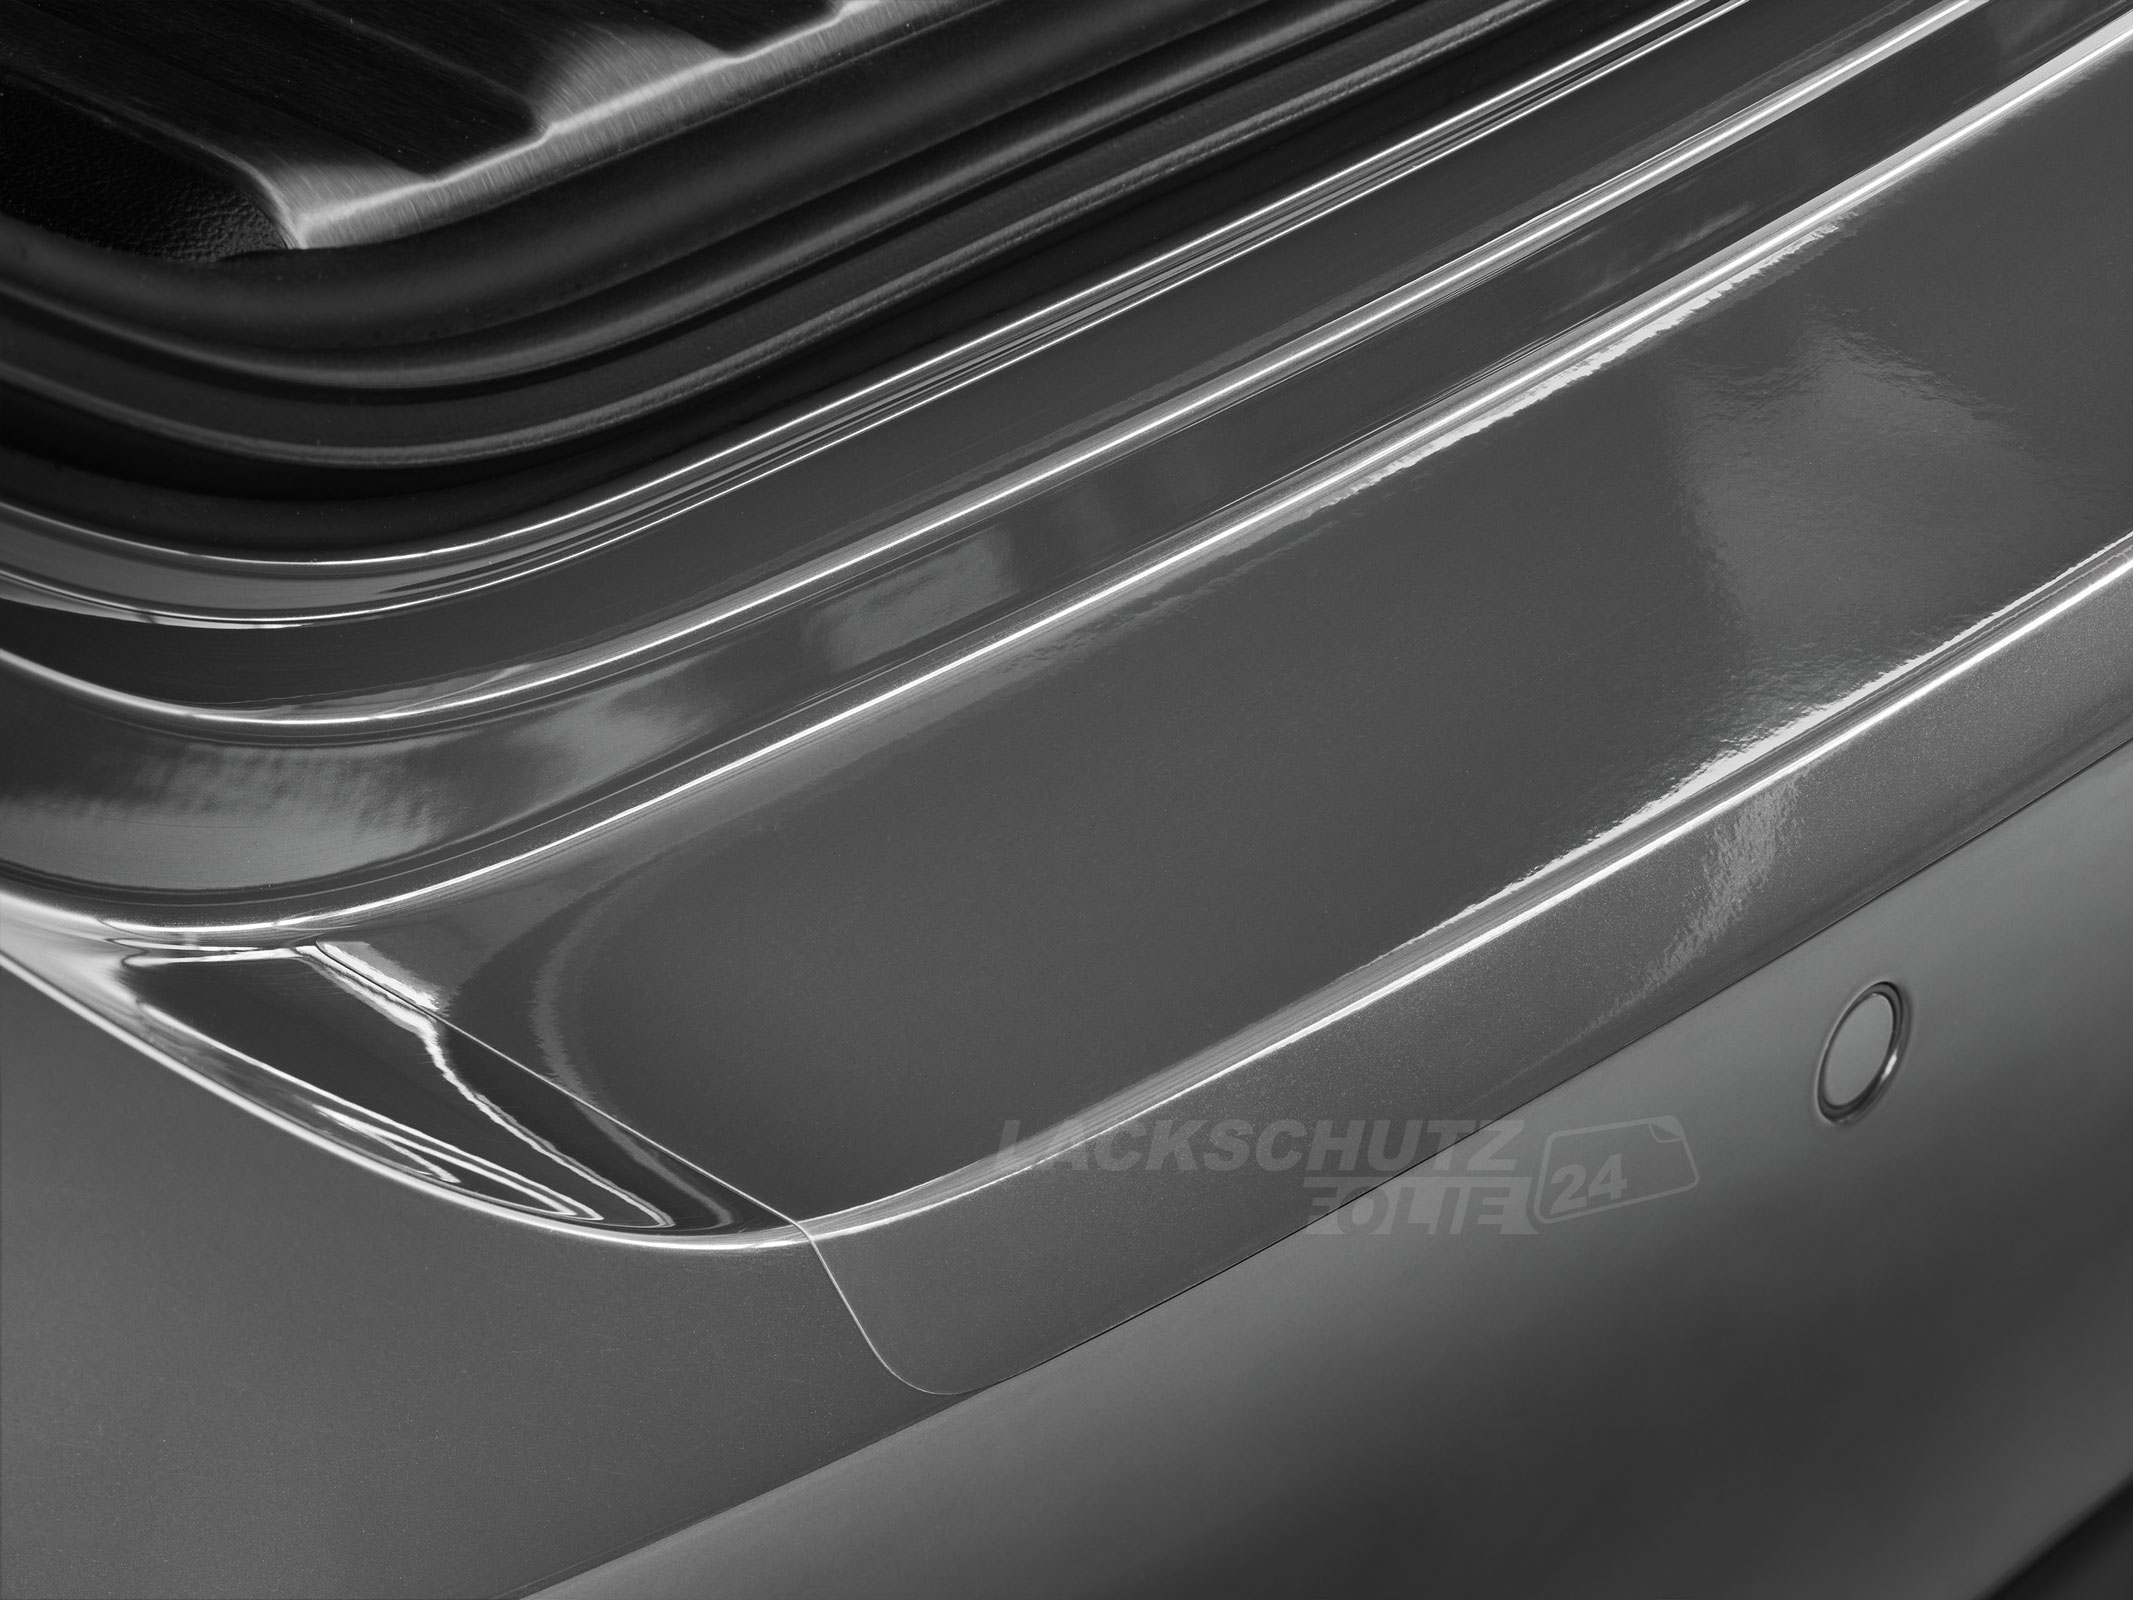 Ladekantenschutzfolie - Transparent Glatt Hochglänzend 240 µm stark für Opel Insignia Country Tourer (Kombi) Typ B, BJ 09/2017-2020